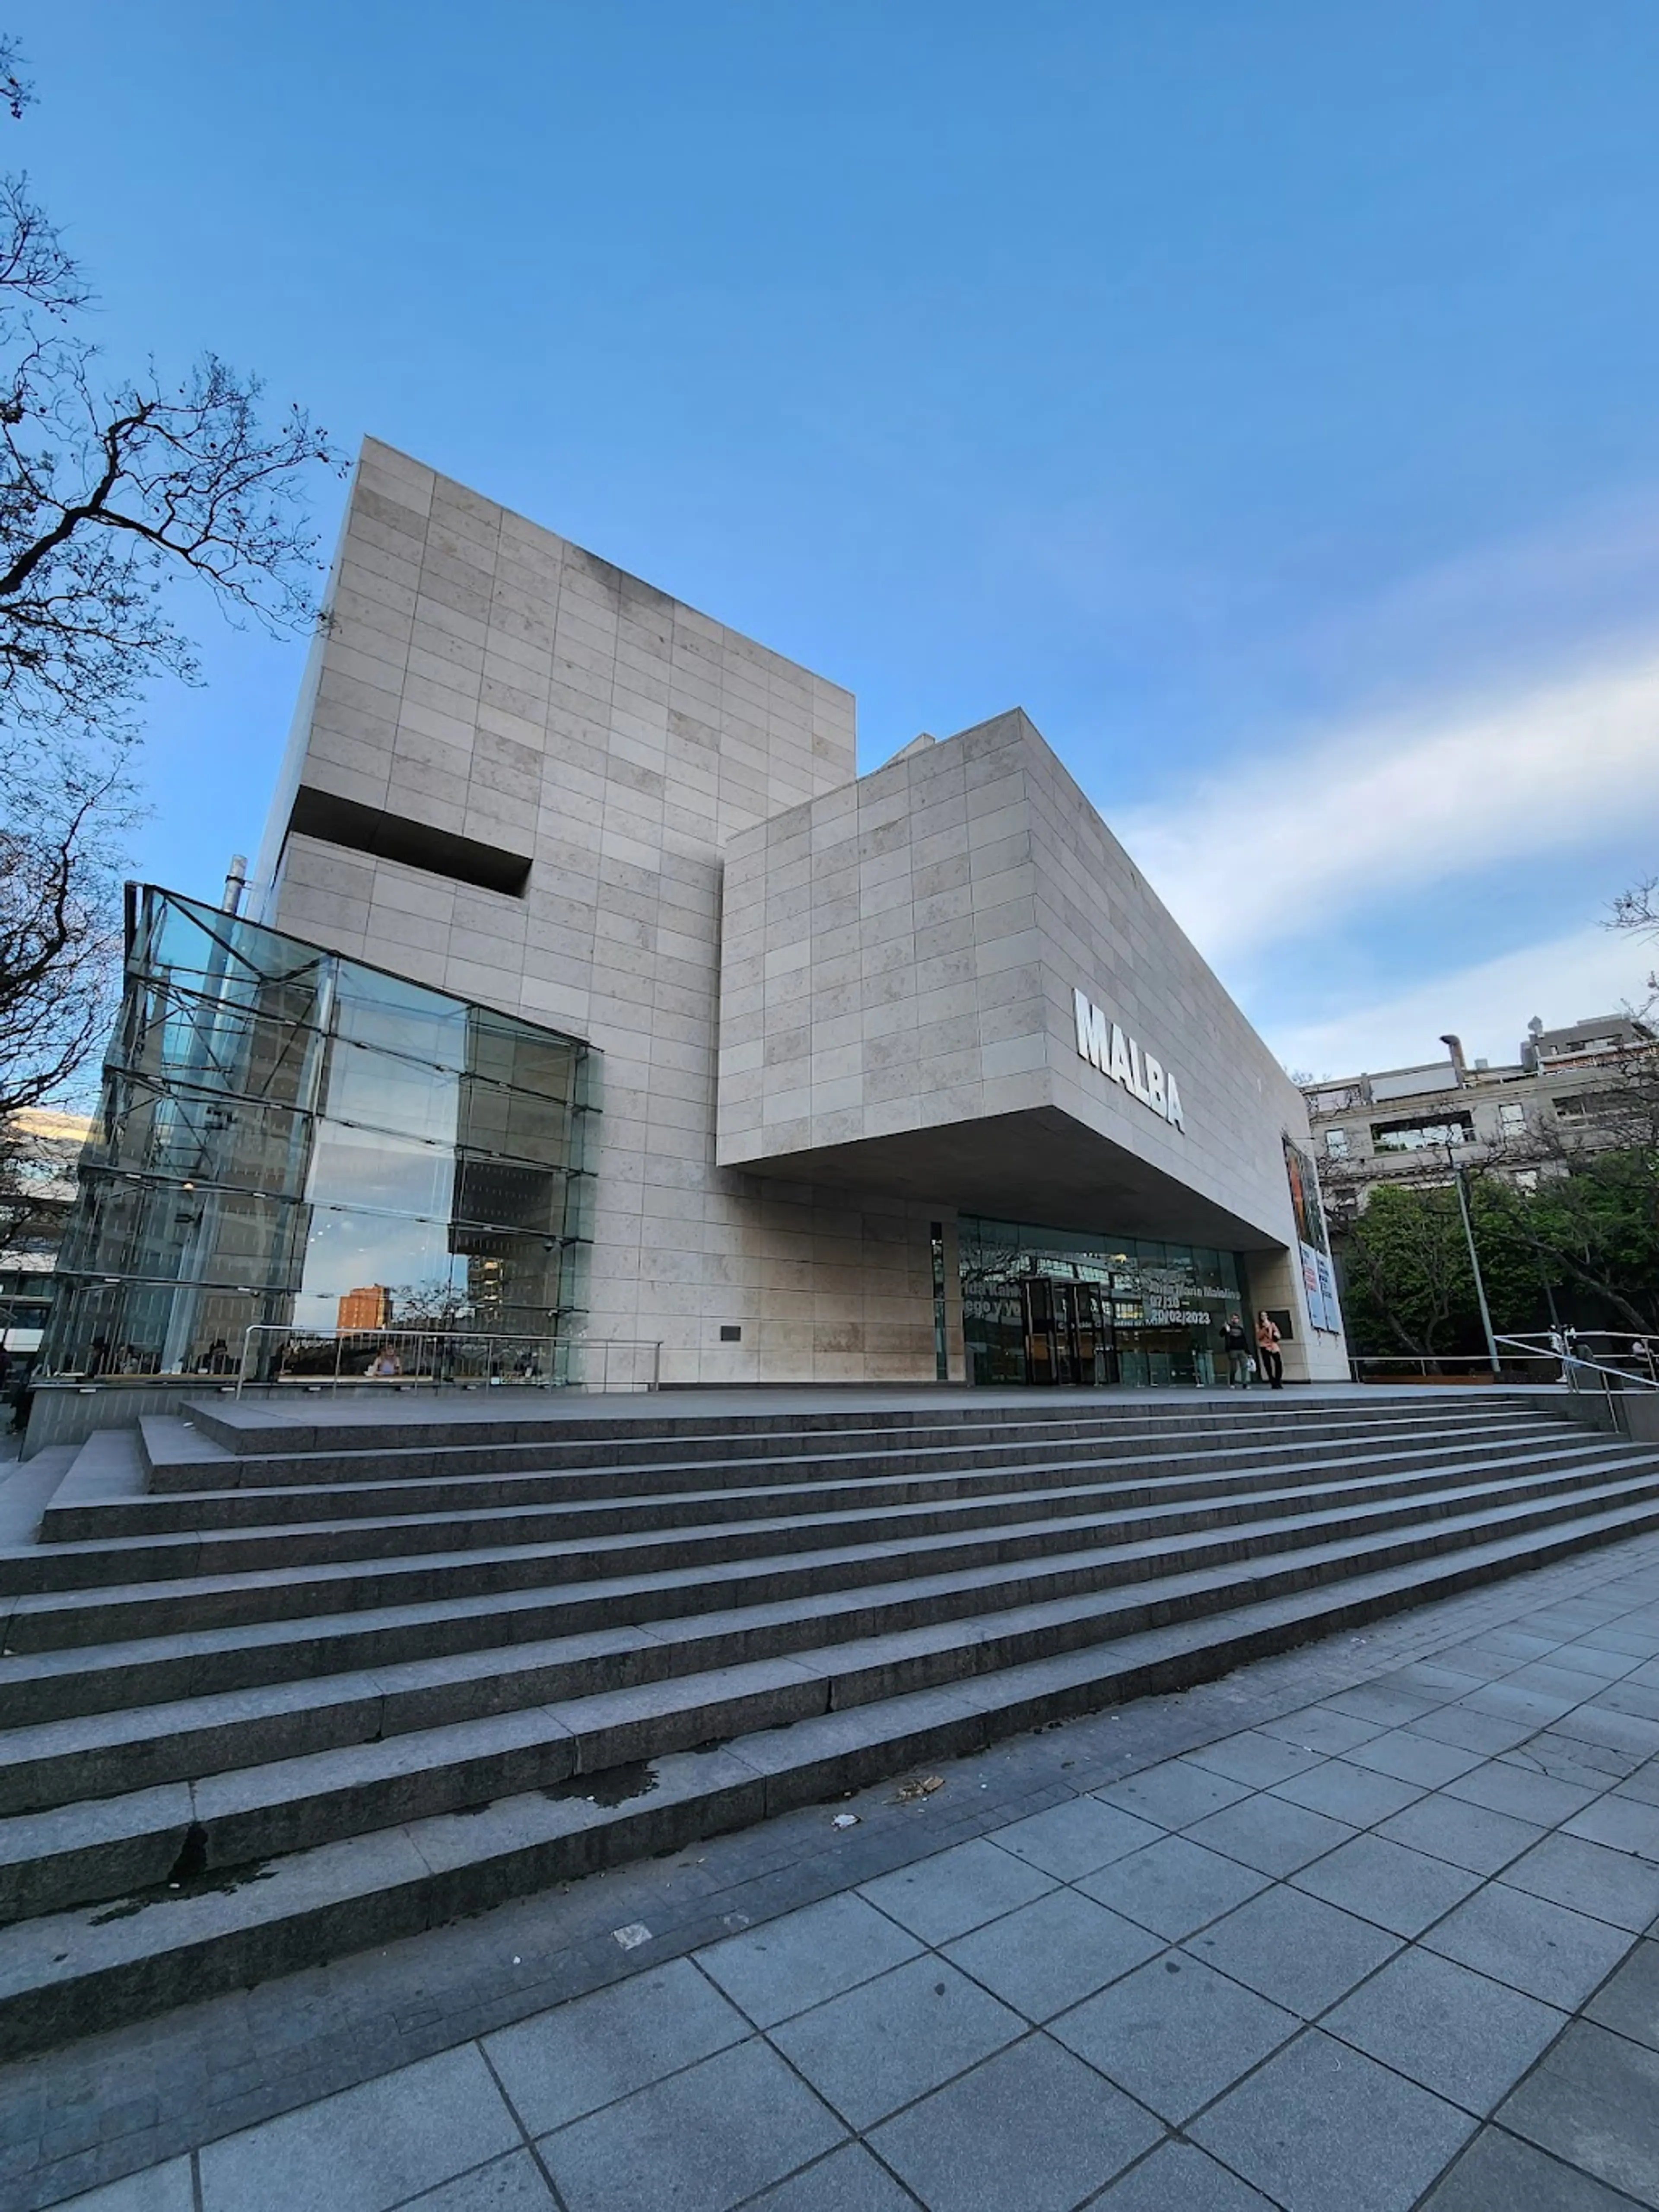 Latin American Art Museum of Buenos Aires (MALBA)